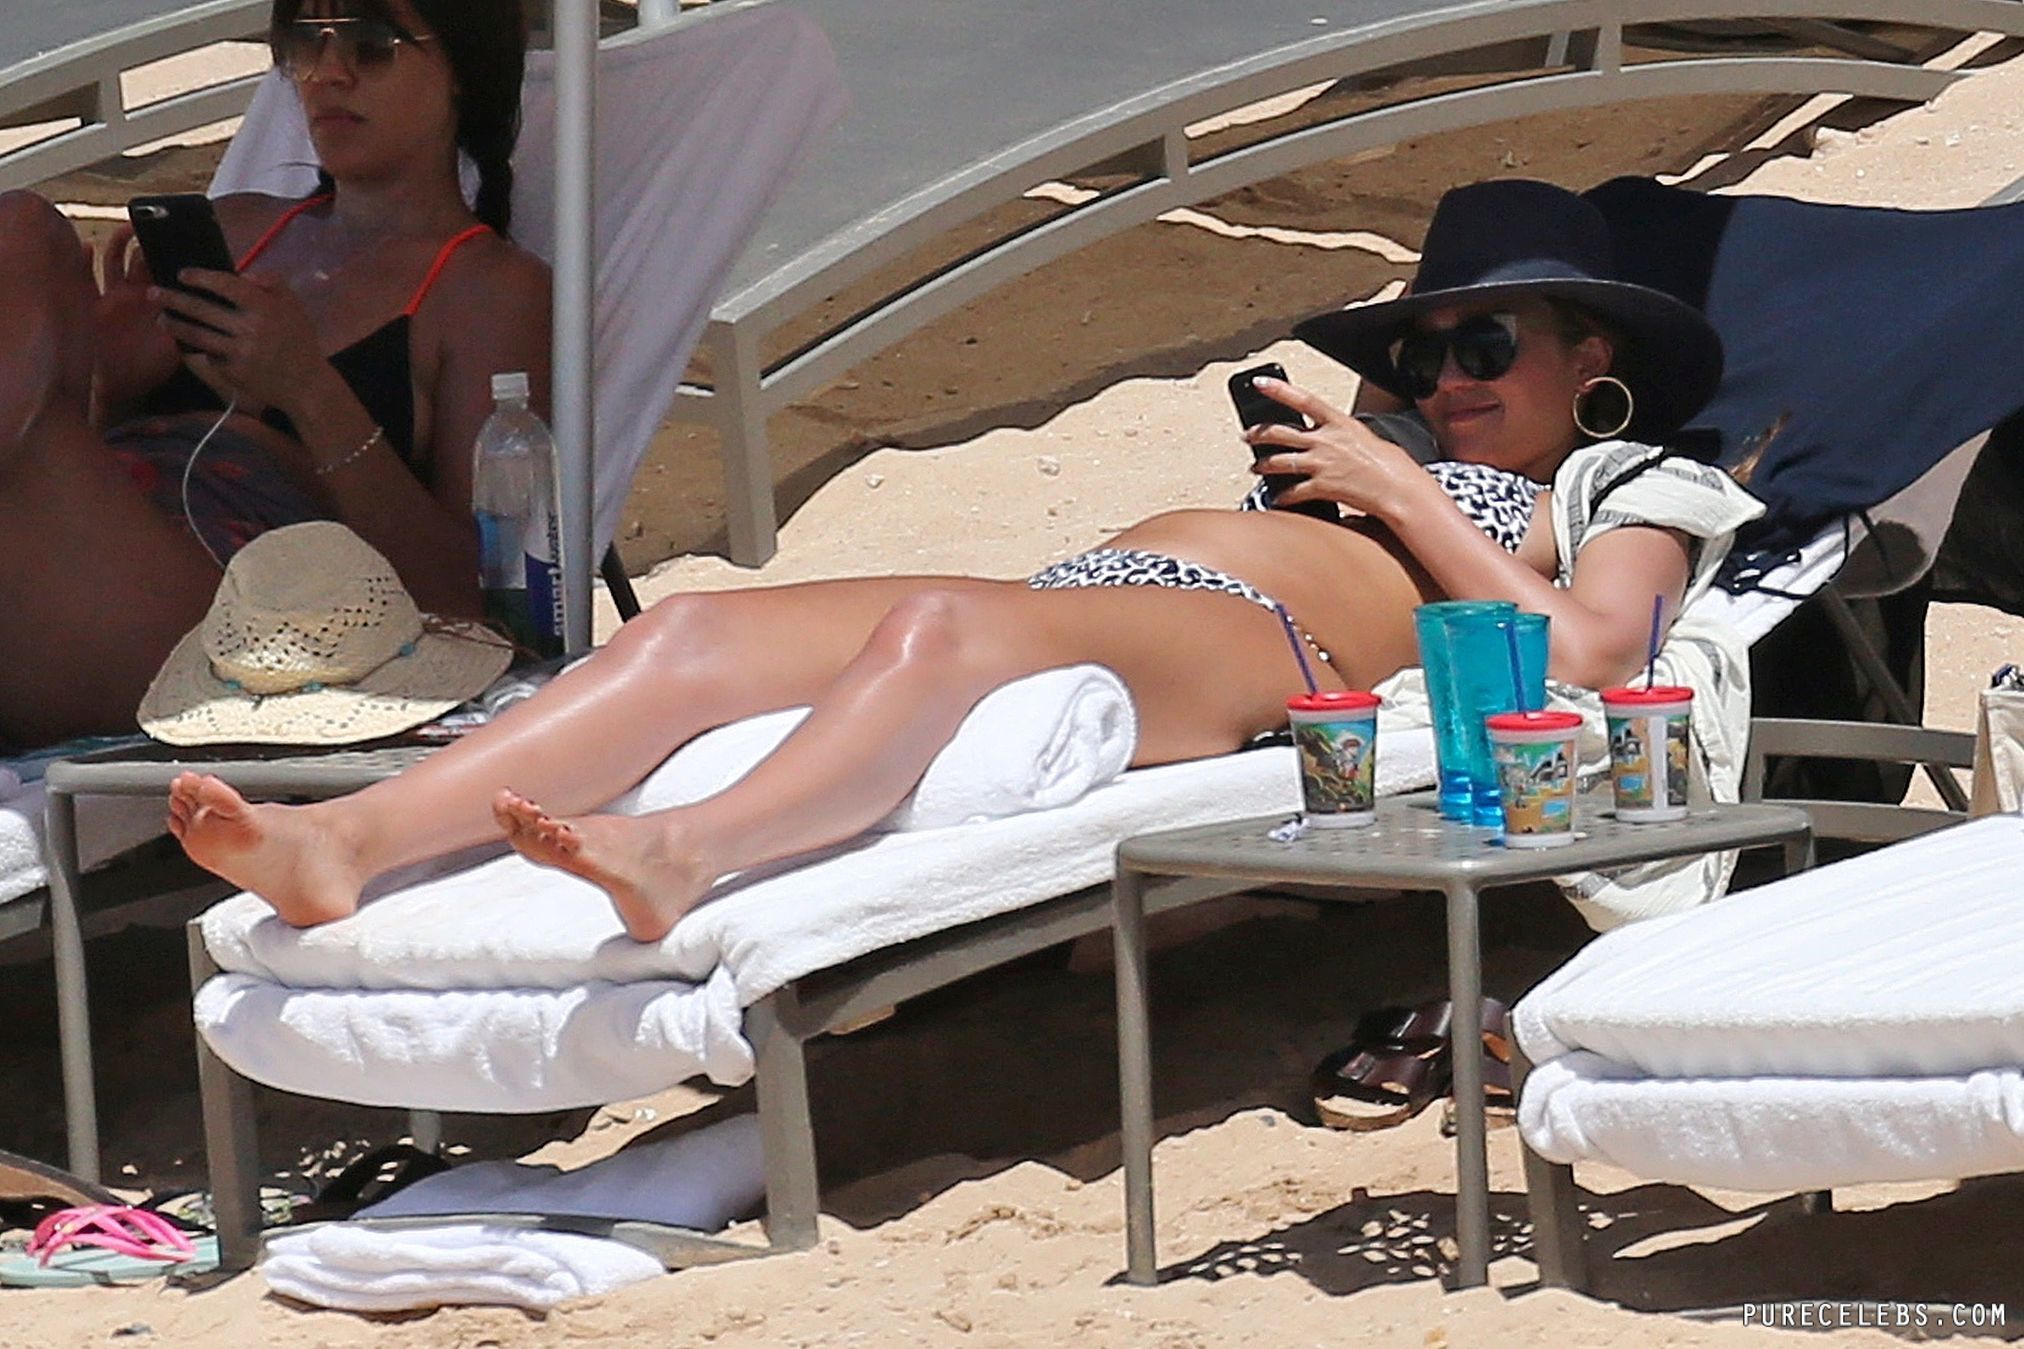 Jessica Alba Topless At Beach - Jessica Alba Caught Sunbathing In The Bikini On A Beach - NuCelebs.com